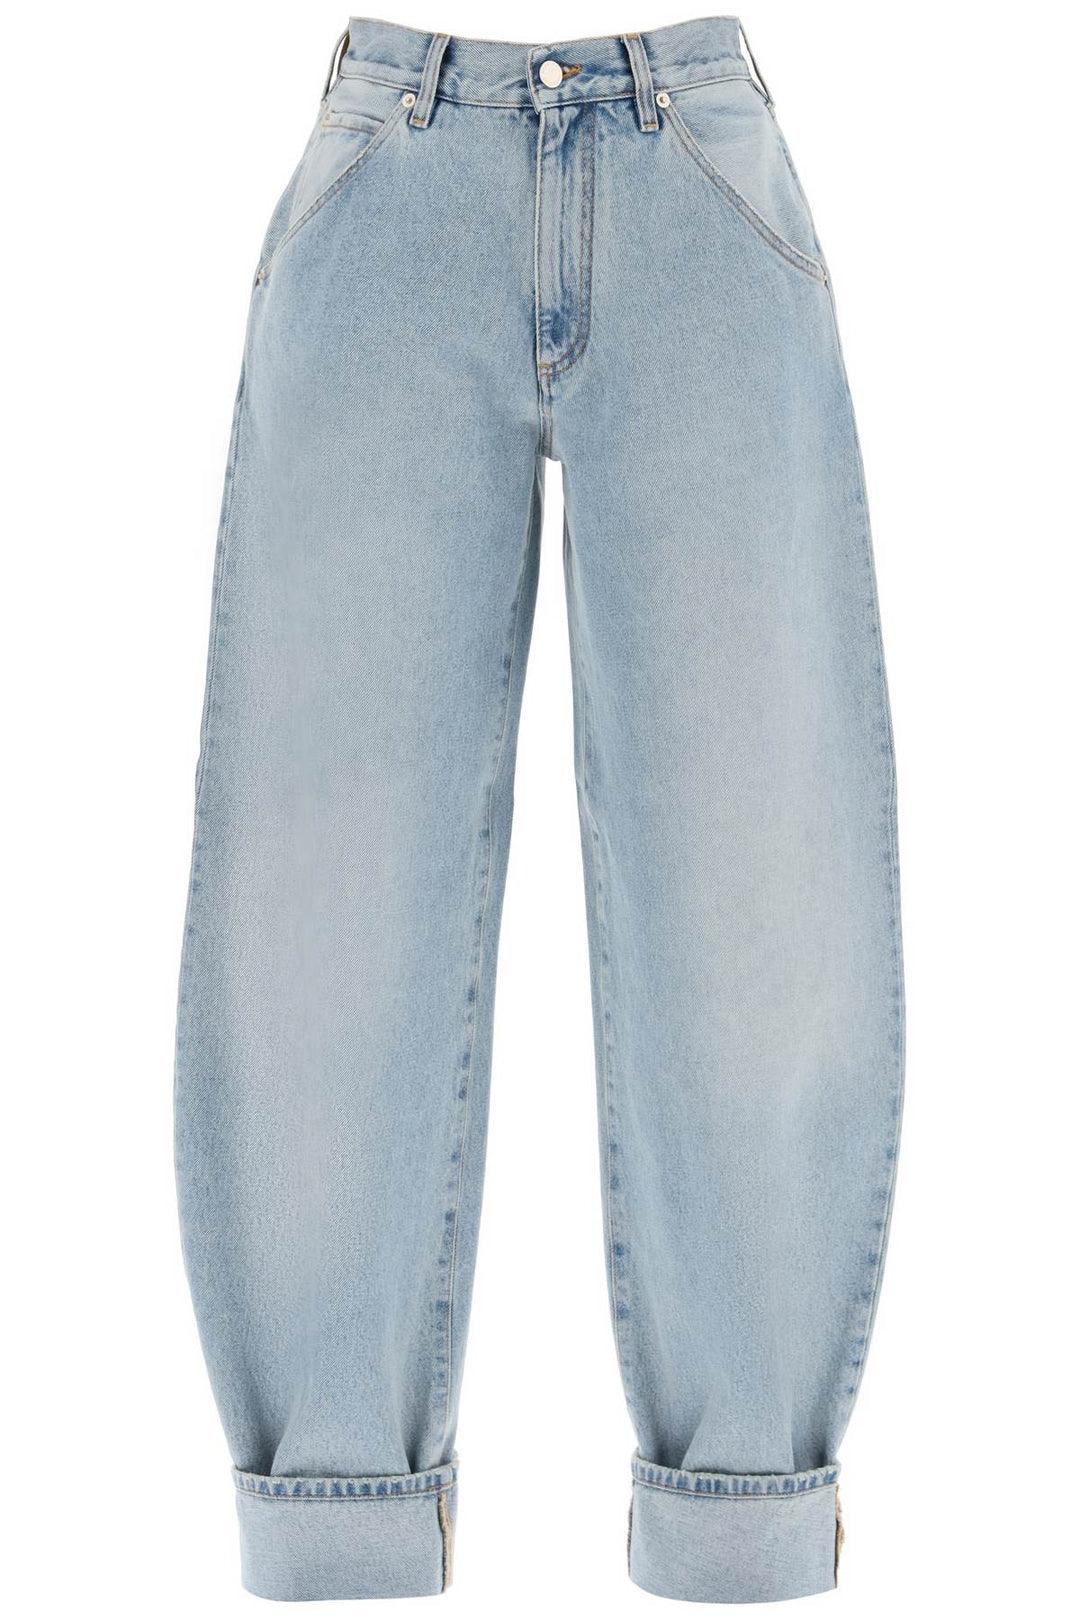 Darkpark Khris Barrel Jeans   Blu